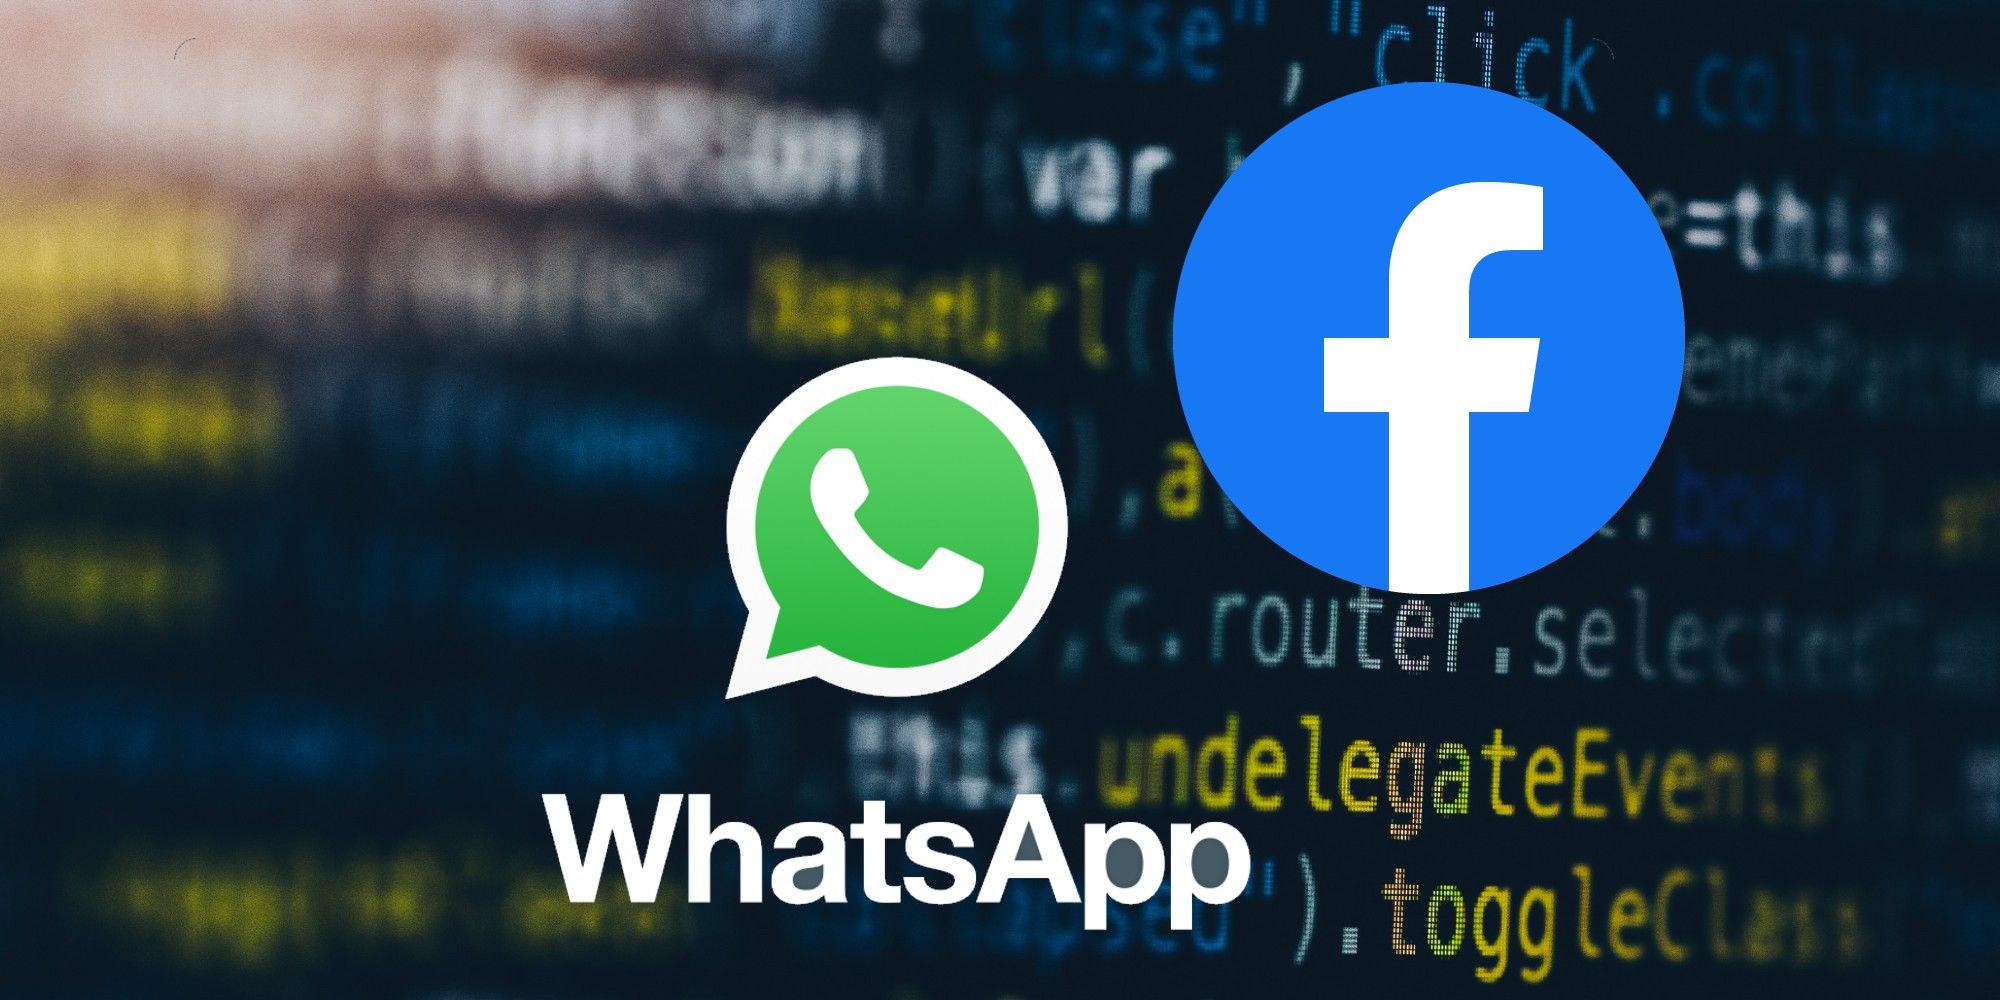 WhatsApp Facebook data sharing